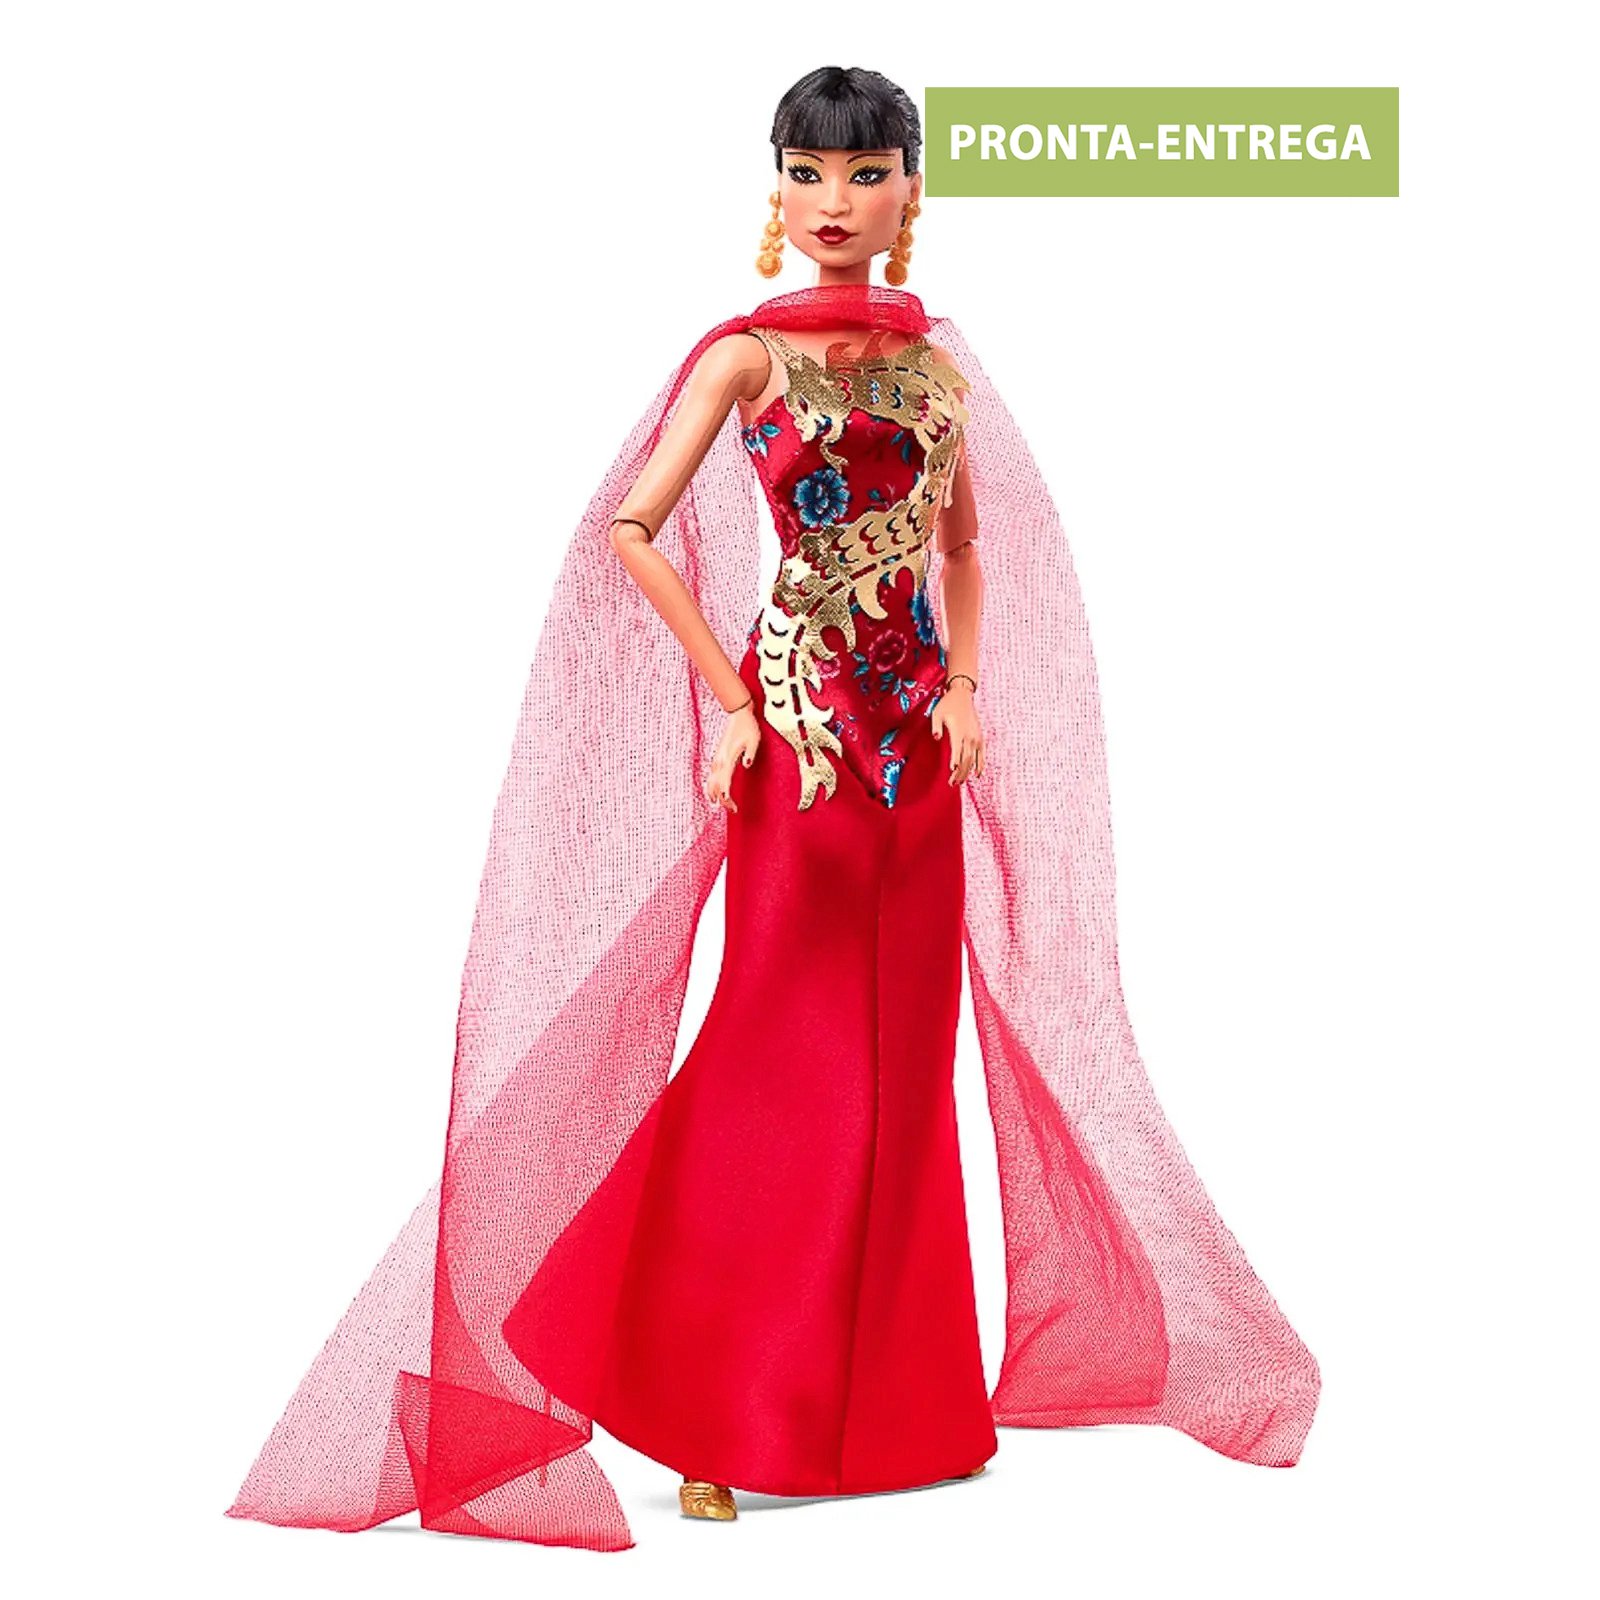 Boneca Barbie Signature Inspiring Women Anna May Wong - Mattel